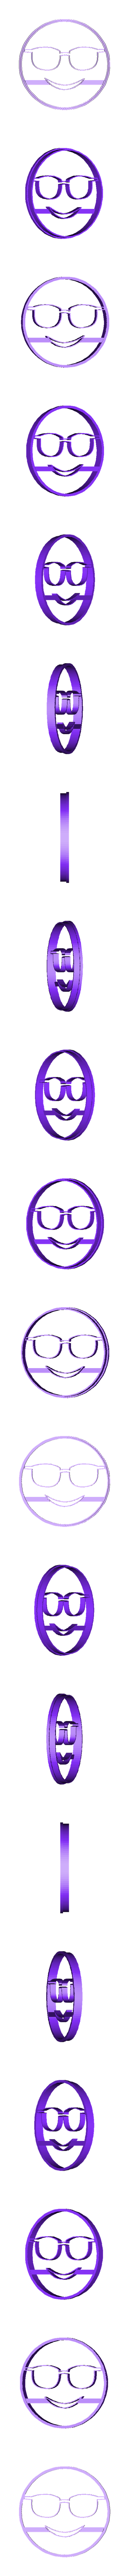 Sunglasses face.stl Download STL file Emoji cookie cutter set 2 • 3D print object, davidruizo